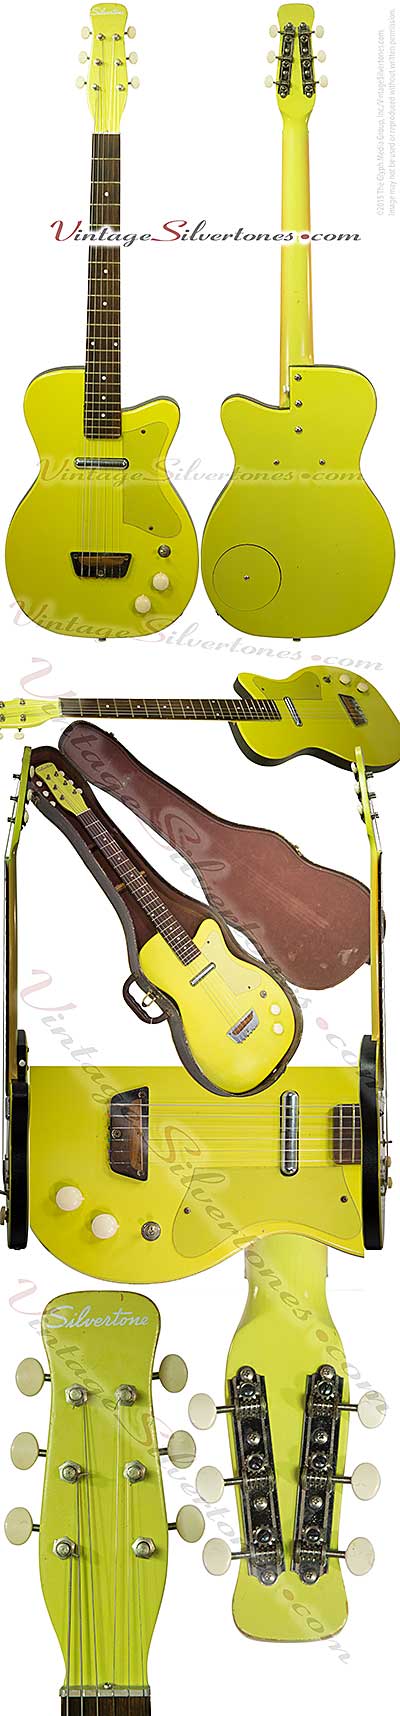 Silvertone 1358 made by Danelectro U1, one pickup, electric guitar, semi-hollow body, yellow finish black vinyl binding, masonite body, lipstick pickup, made in 1955